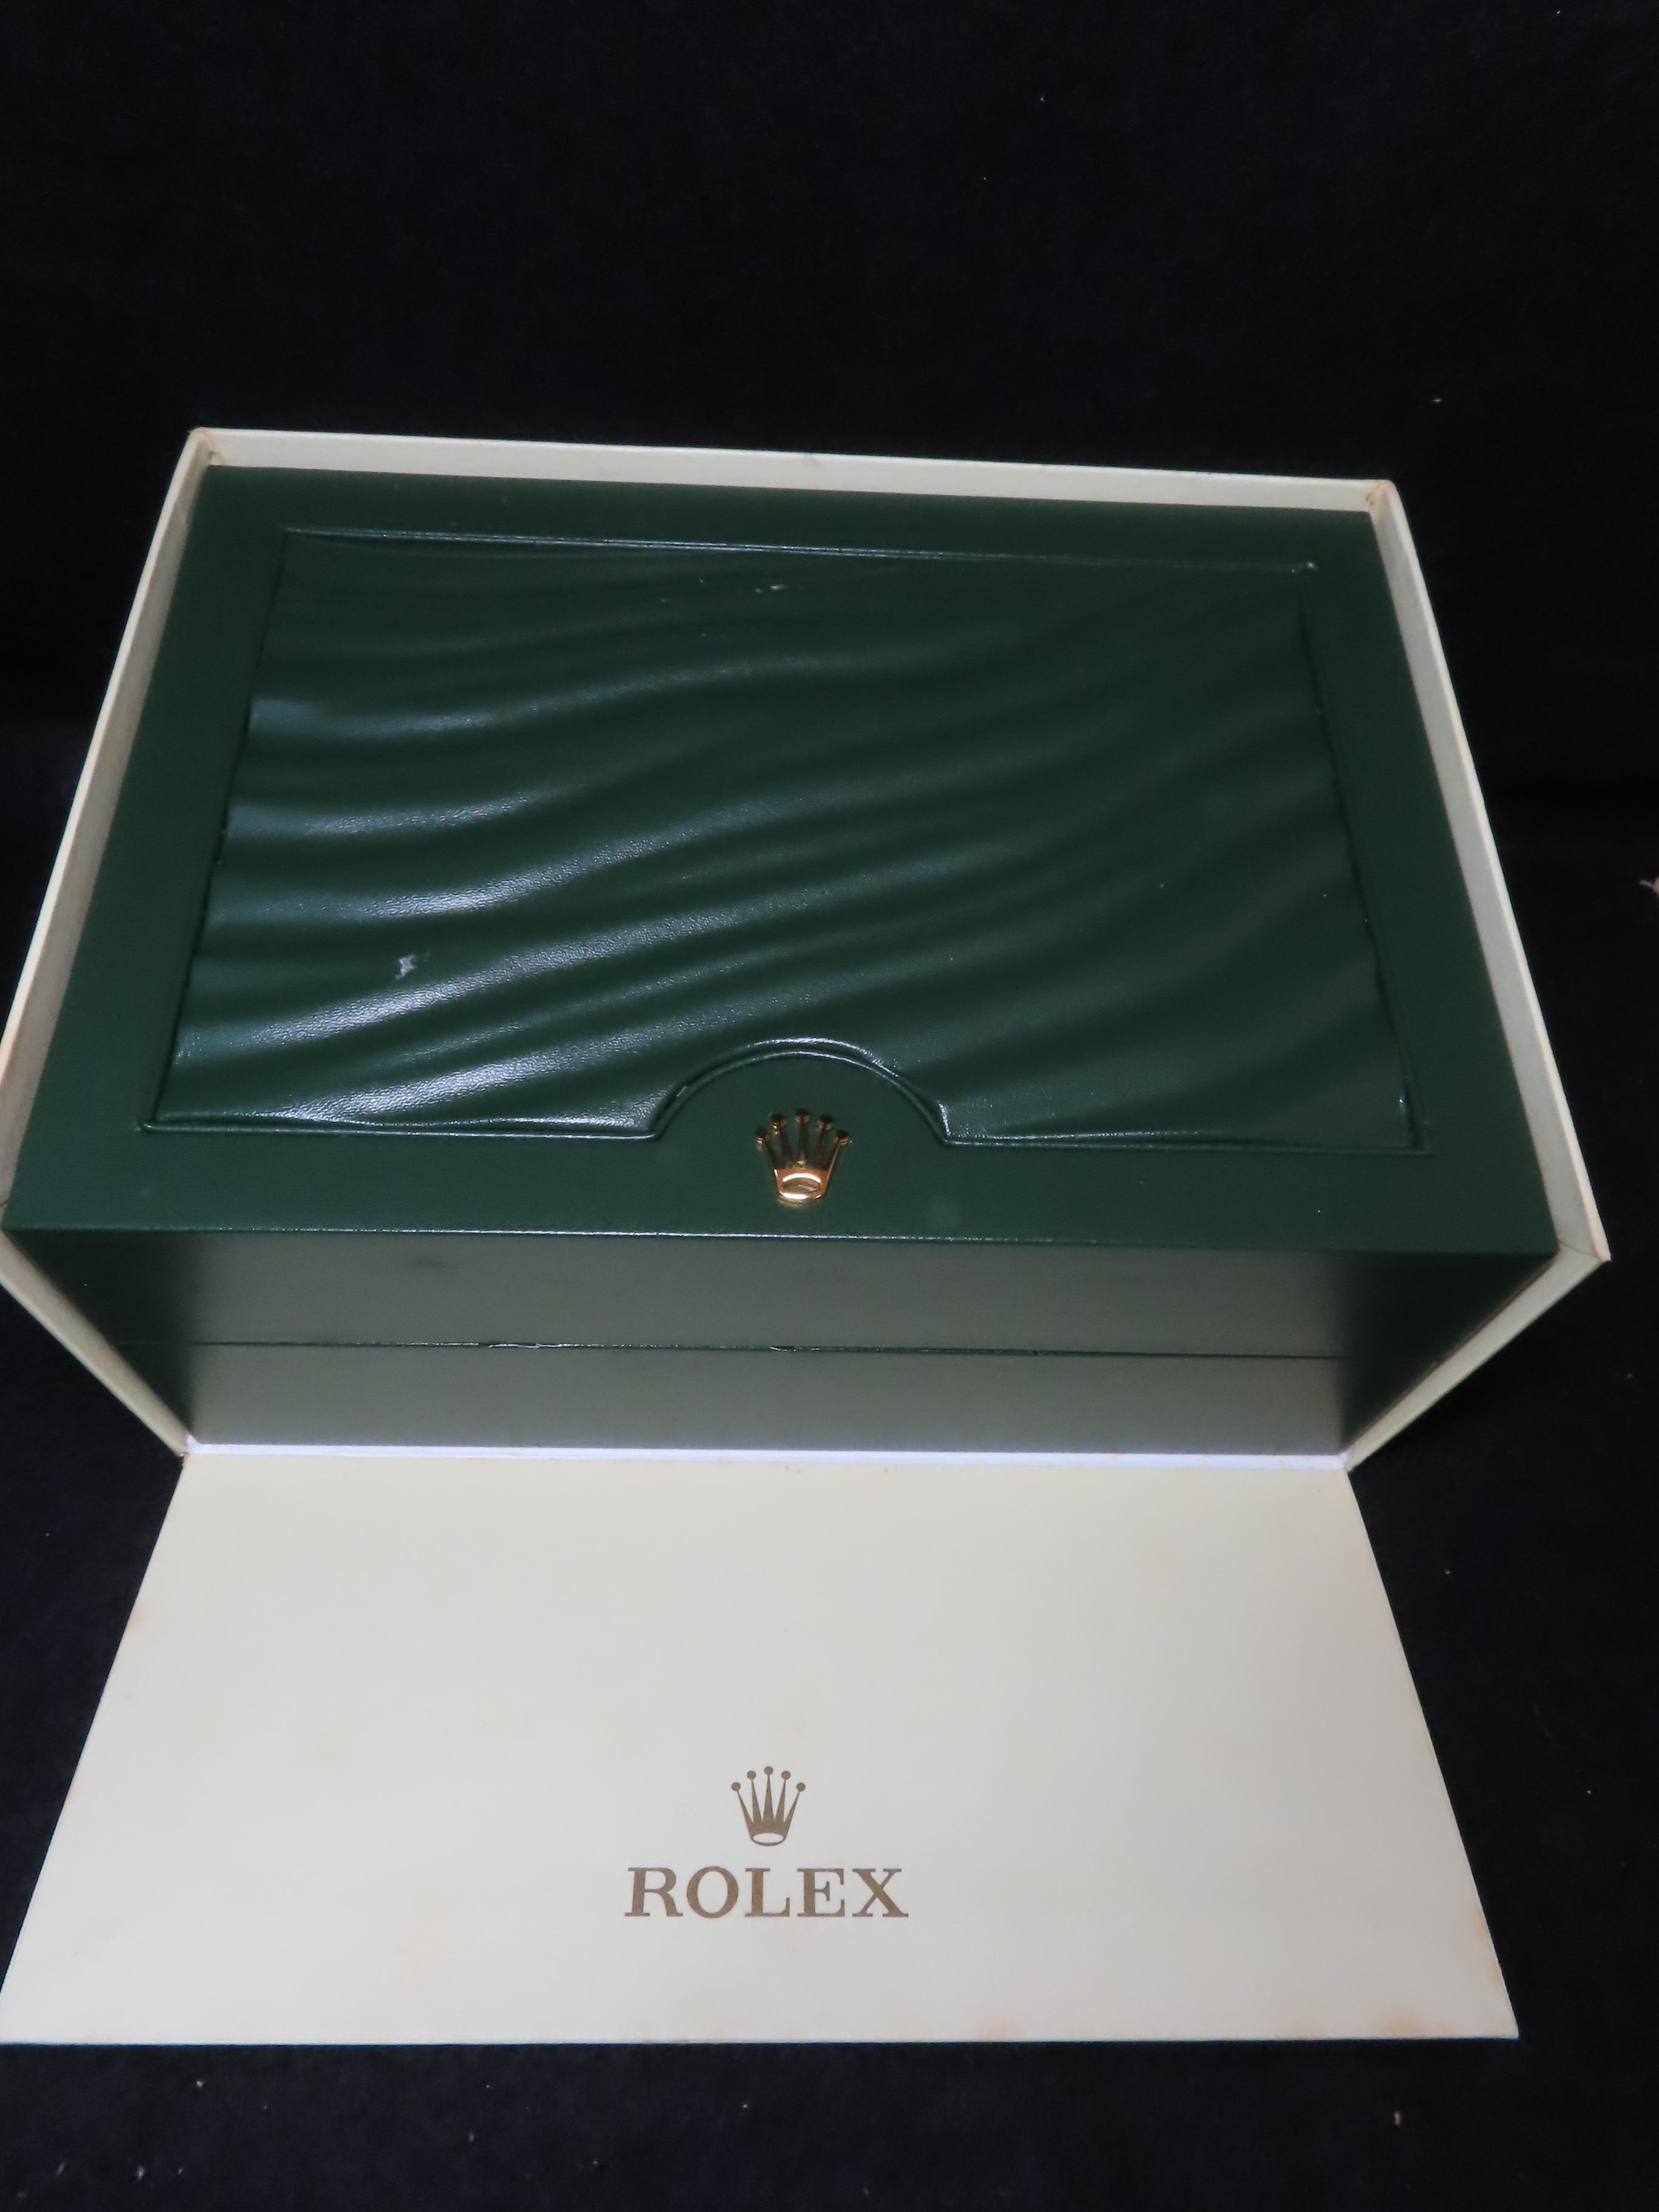 Gents Rolex 18KT Gold DayDate The President Wristwatch, Retail Value $23,000